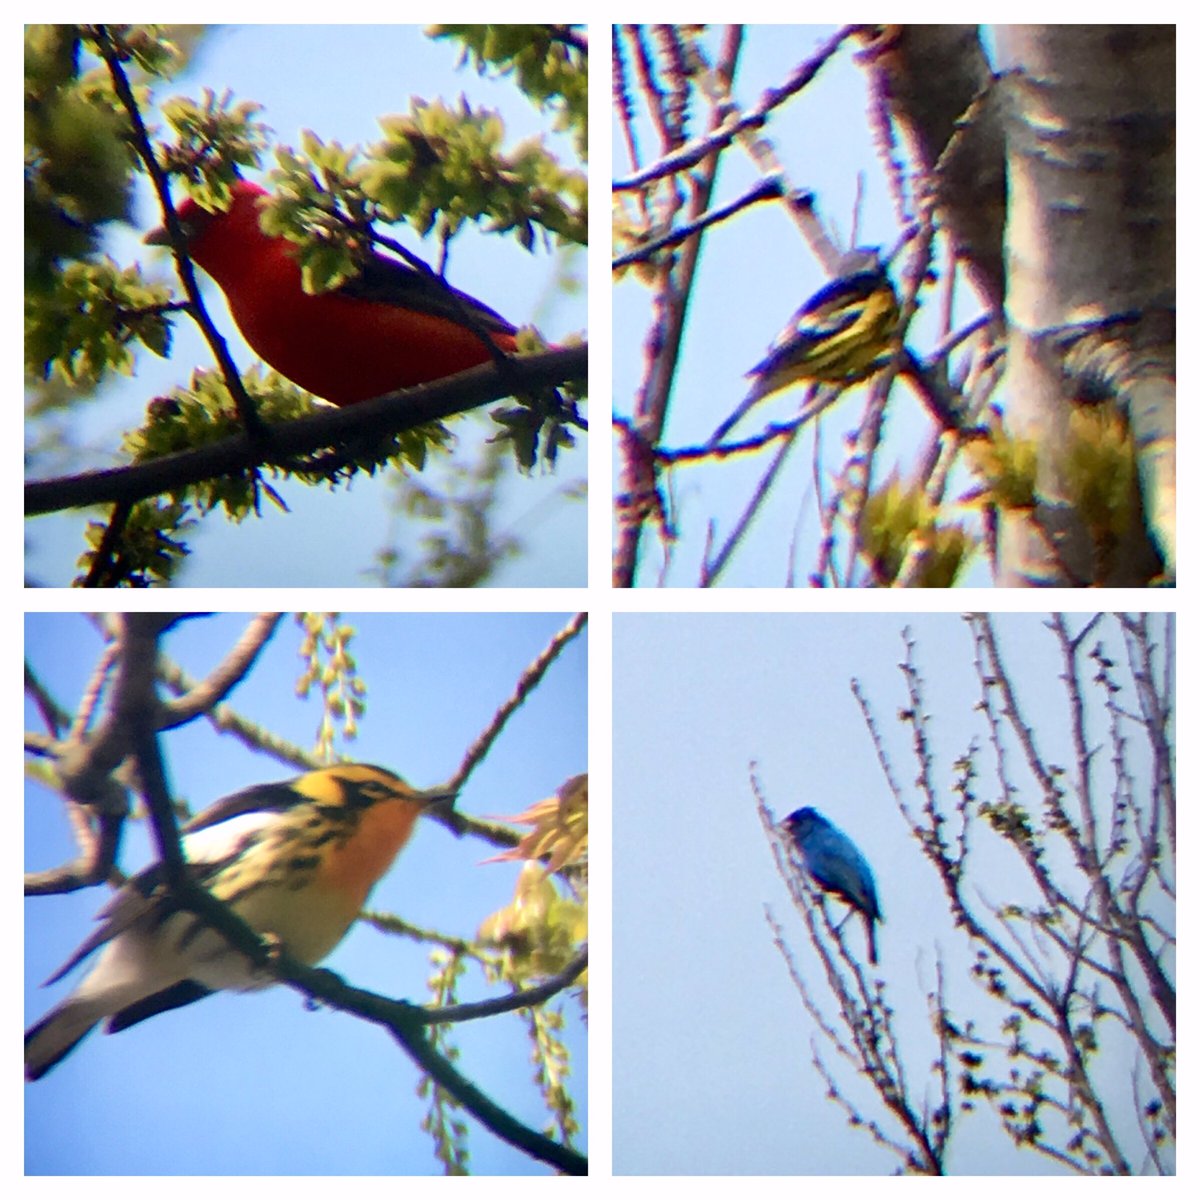 Beautiful sights (and not great quality photos!) at Ontario Place this morning | Scarlet tanager, magnolia warbler, blackburnian warbler, and an indigo bunting   #BirdsofToronto